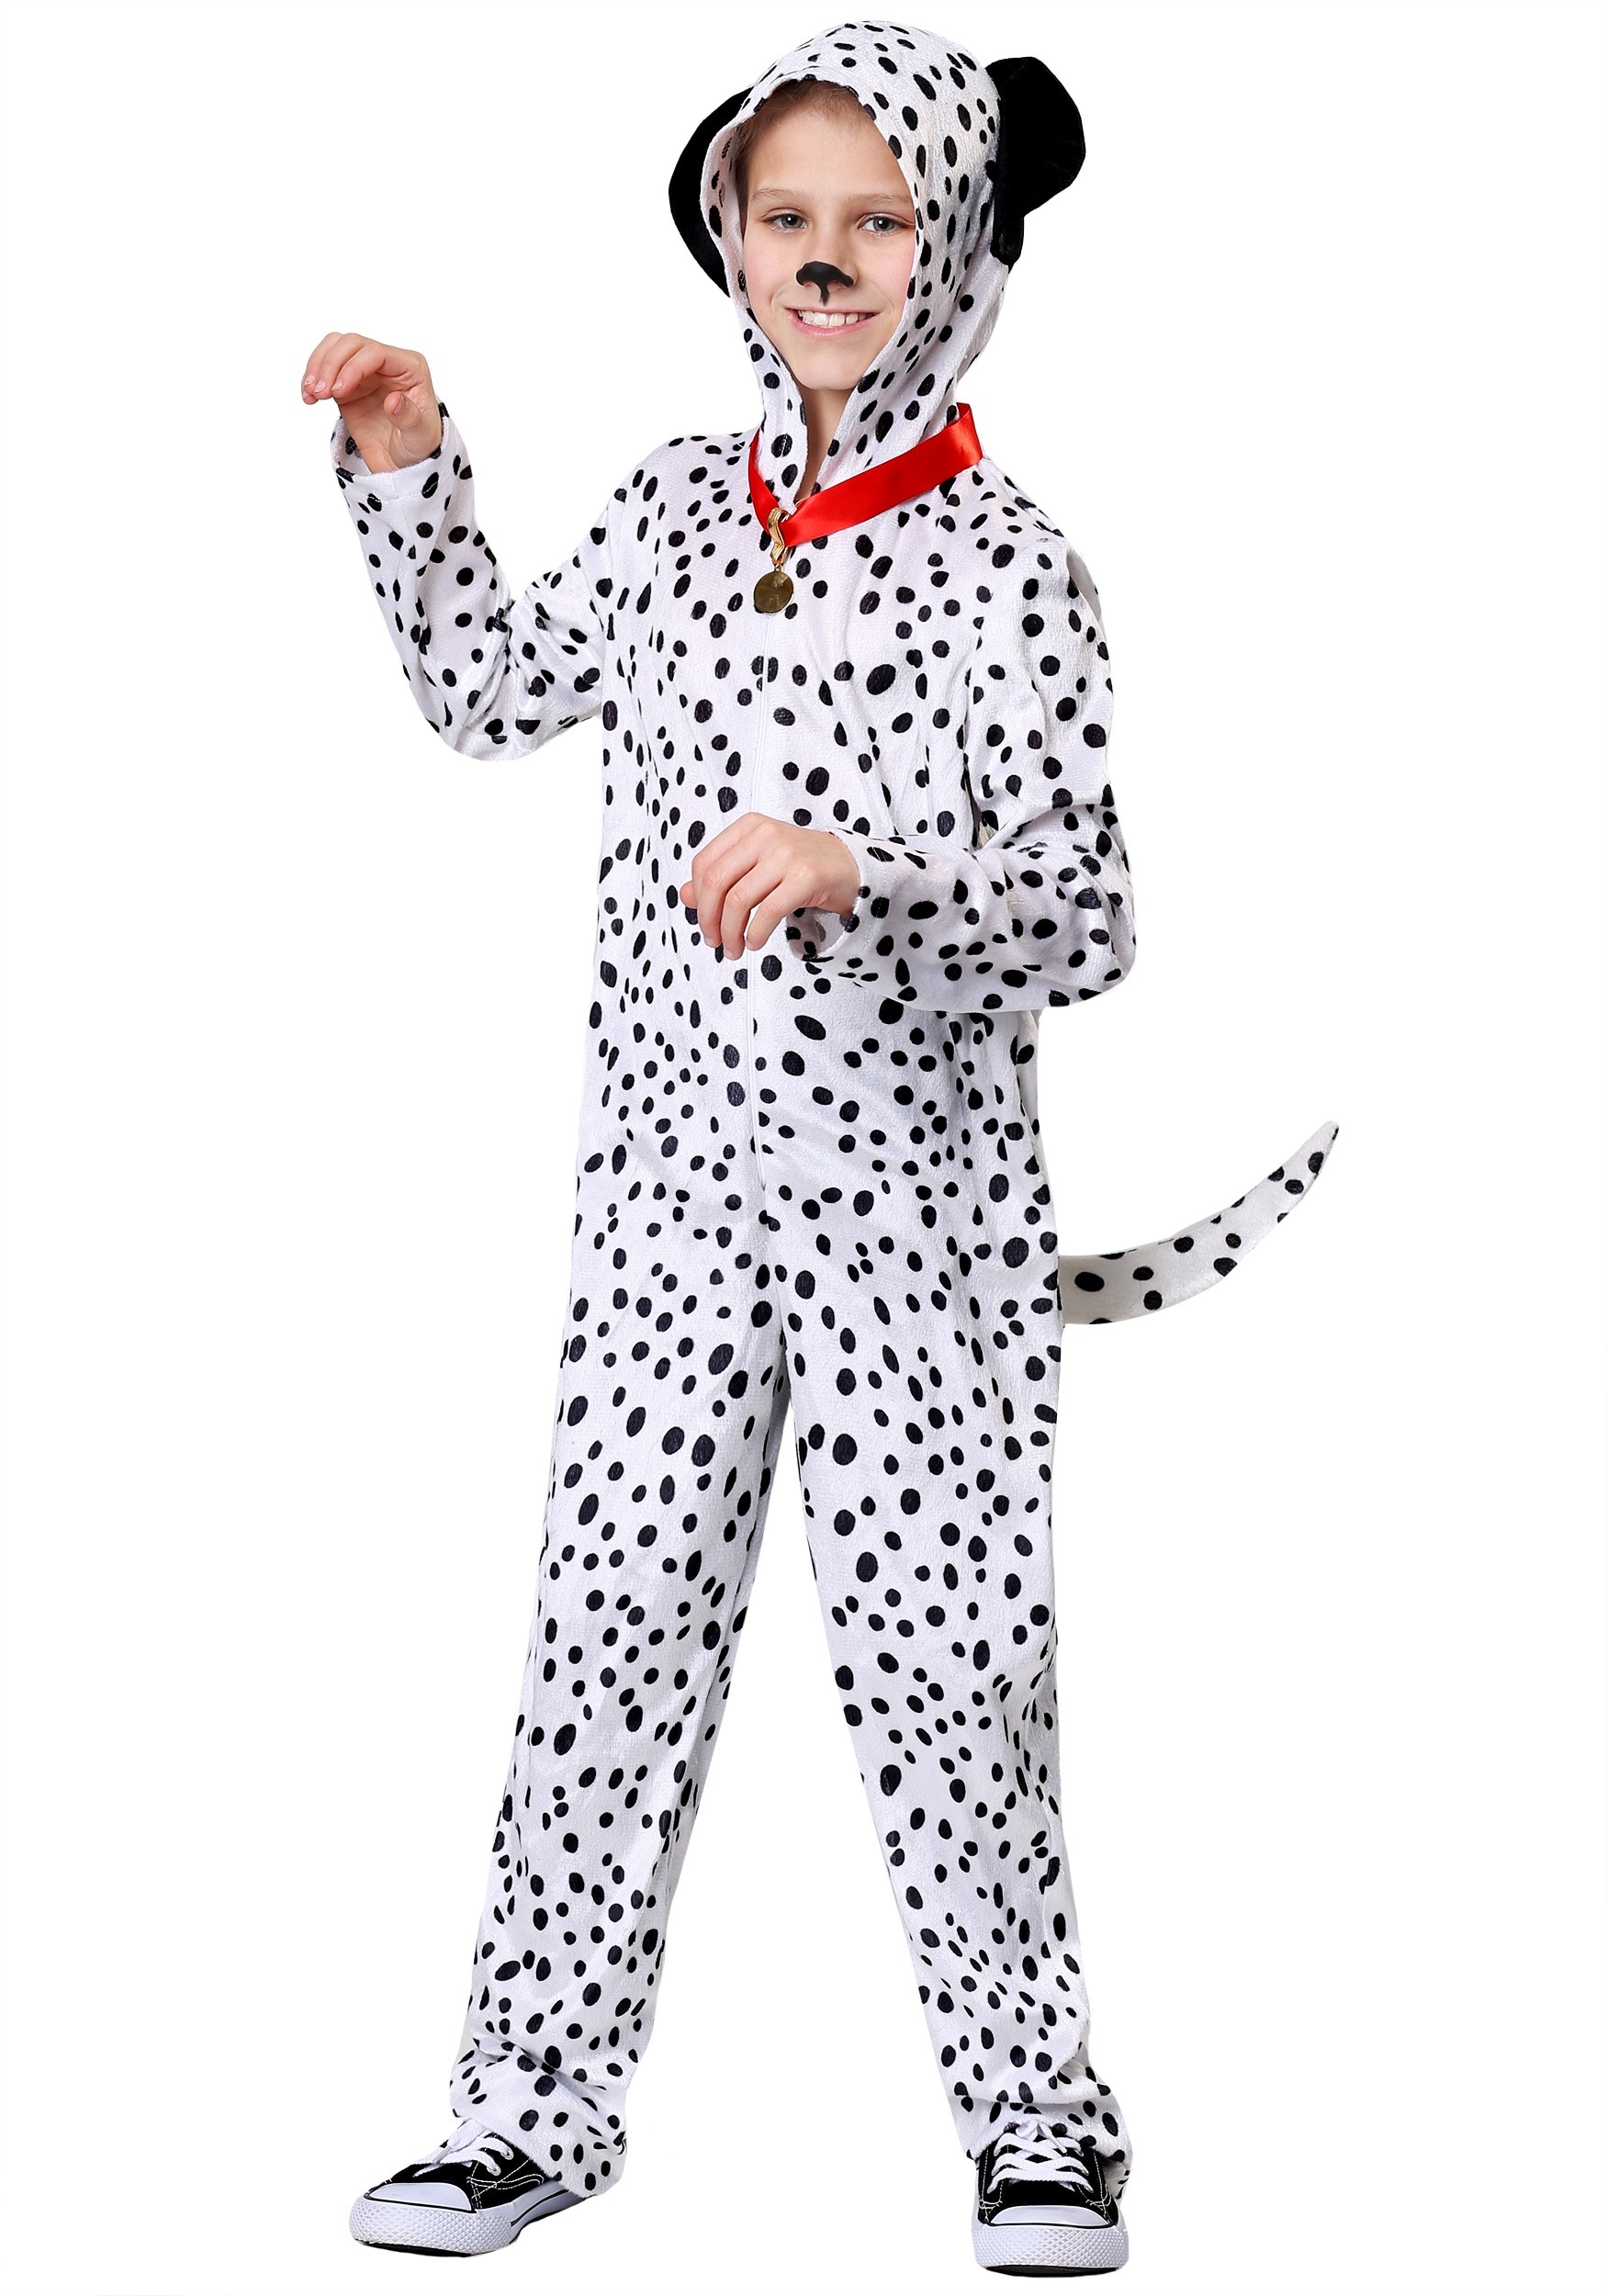 Delightful Dalmatian kids Costume